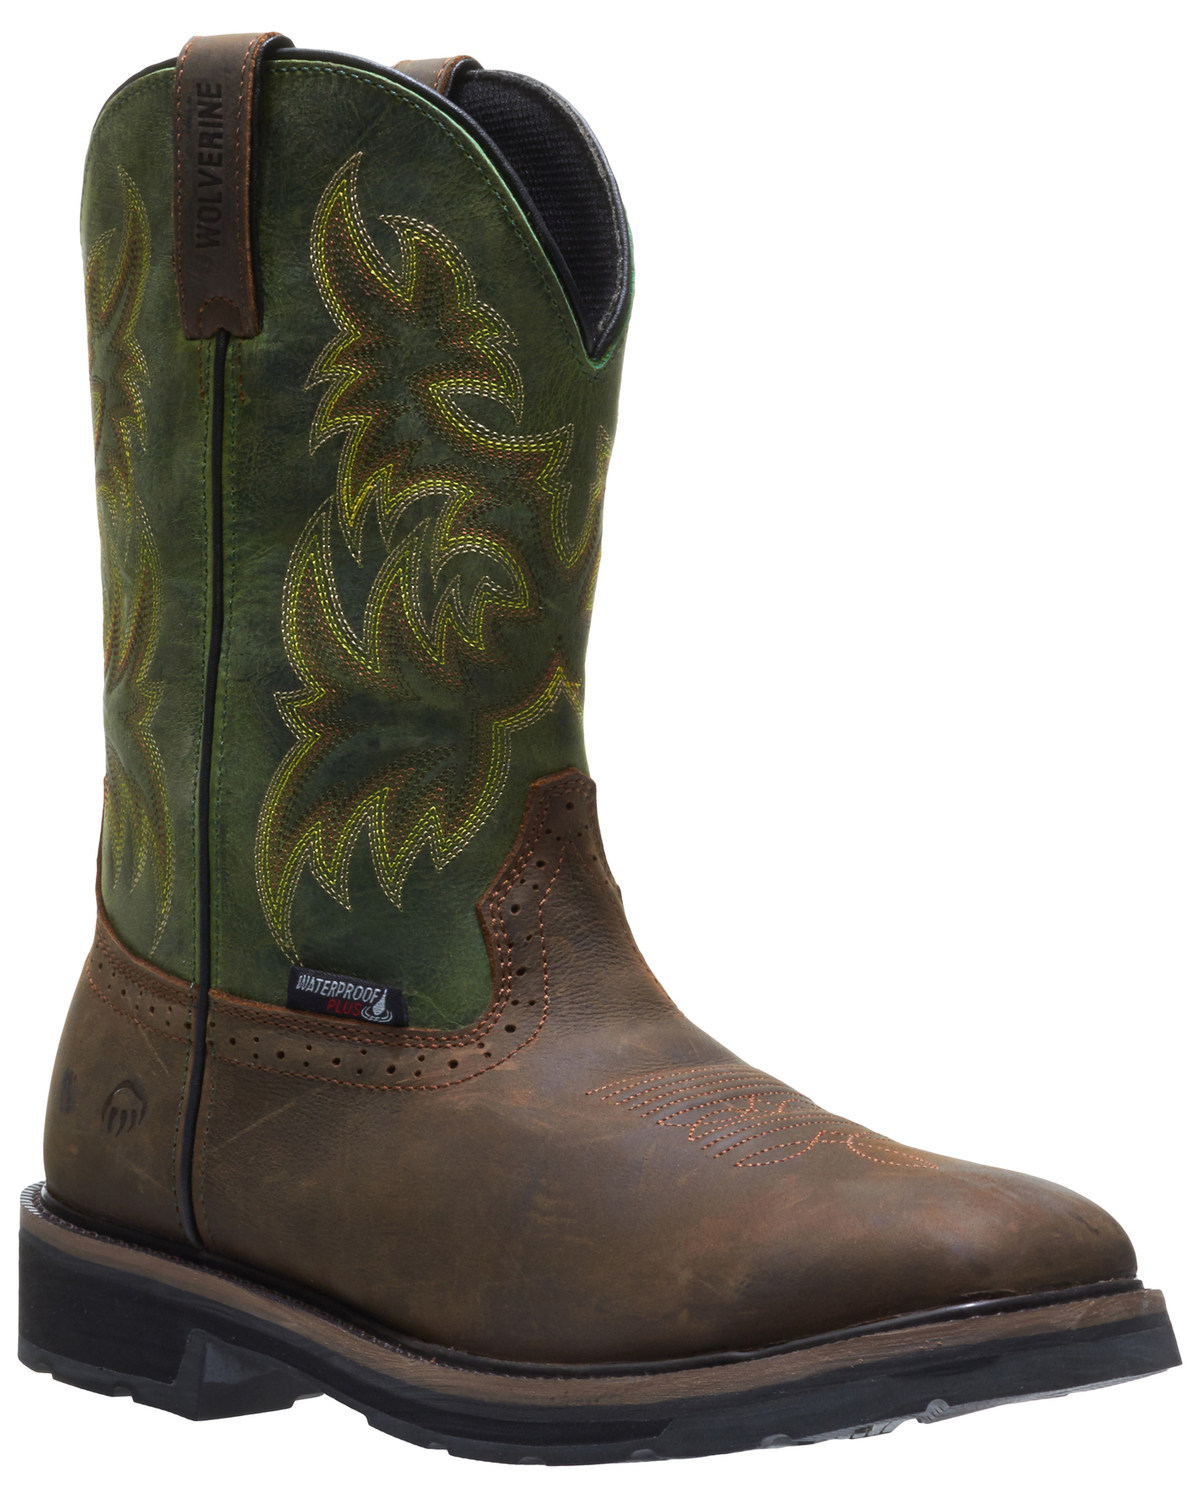 Rancher Waterproof Western Work Boots 